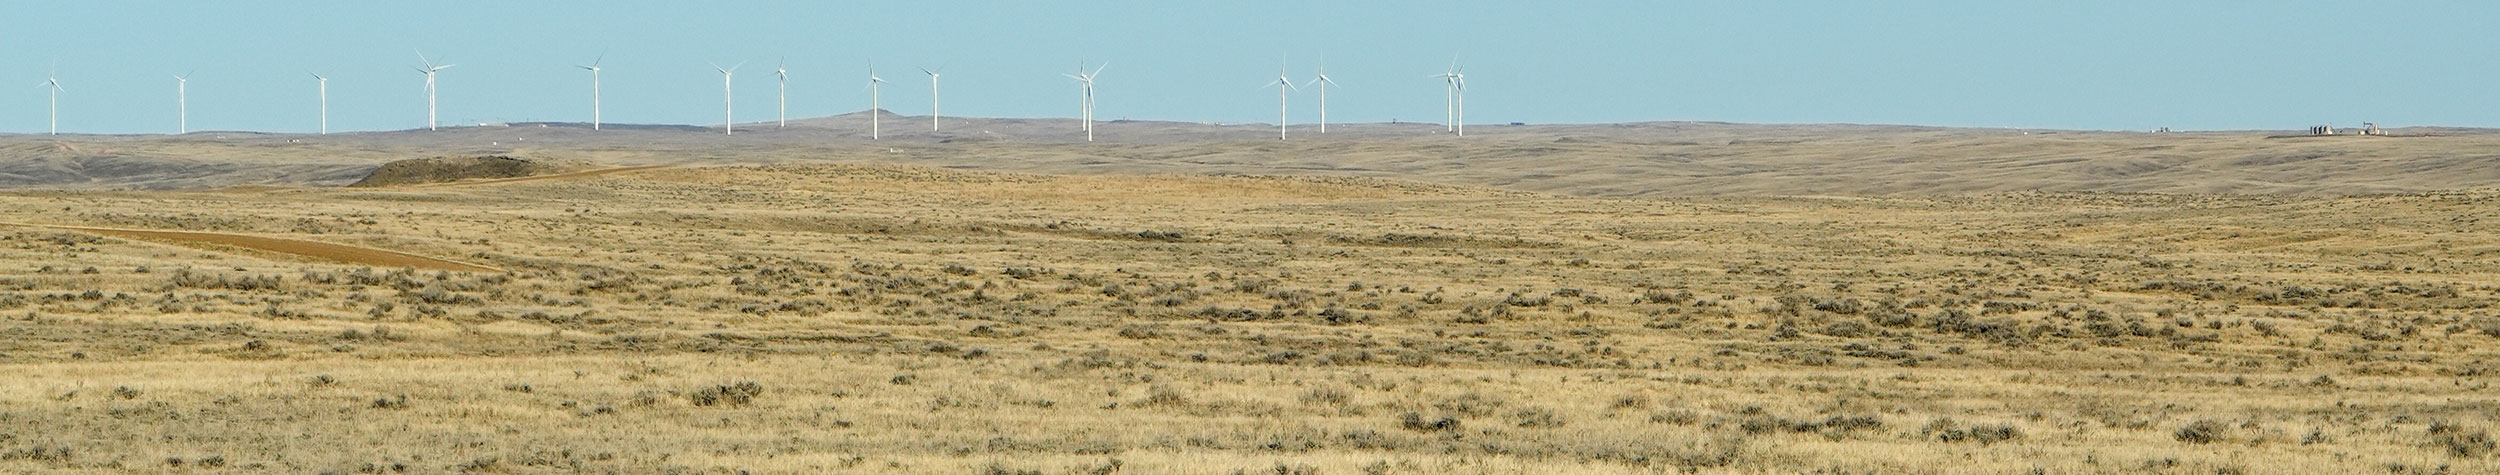 Prairie with windmills